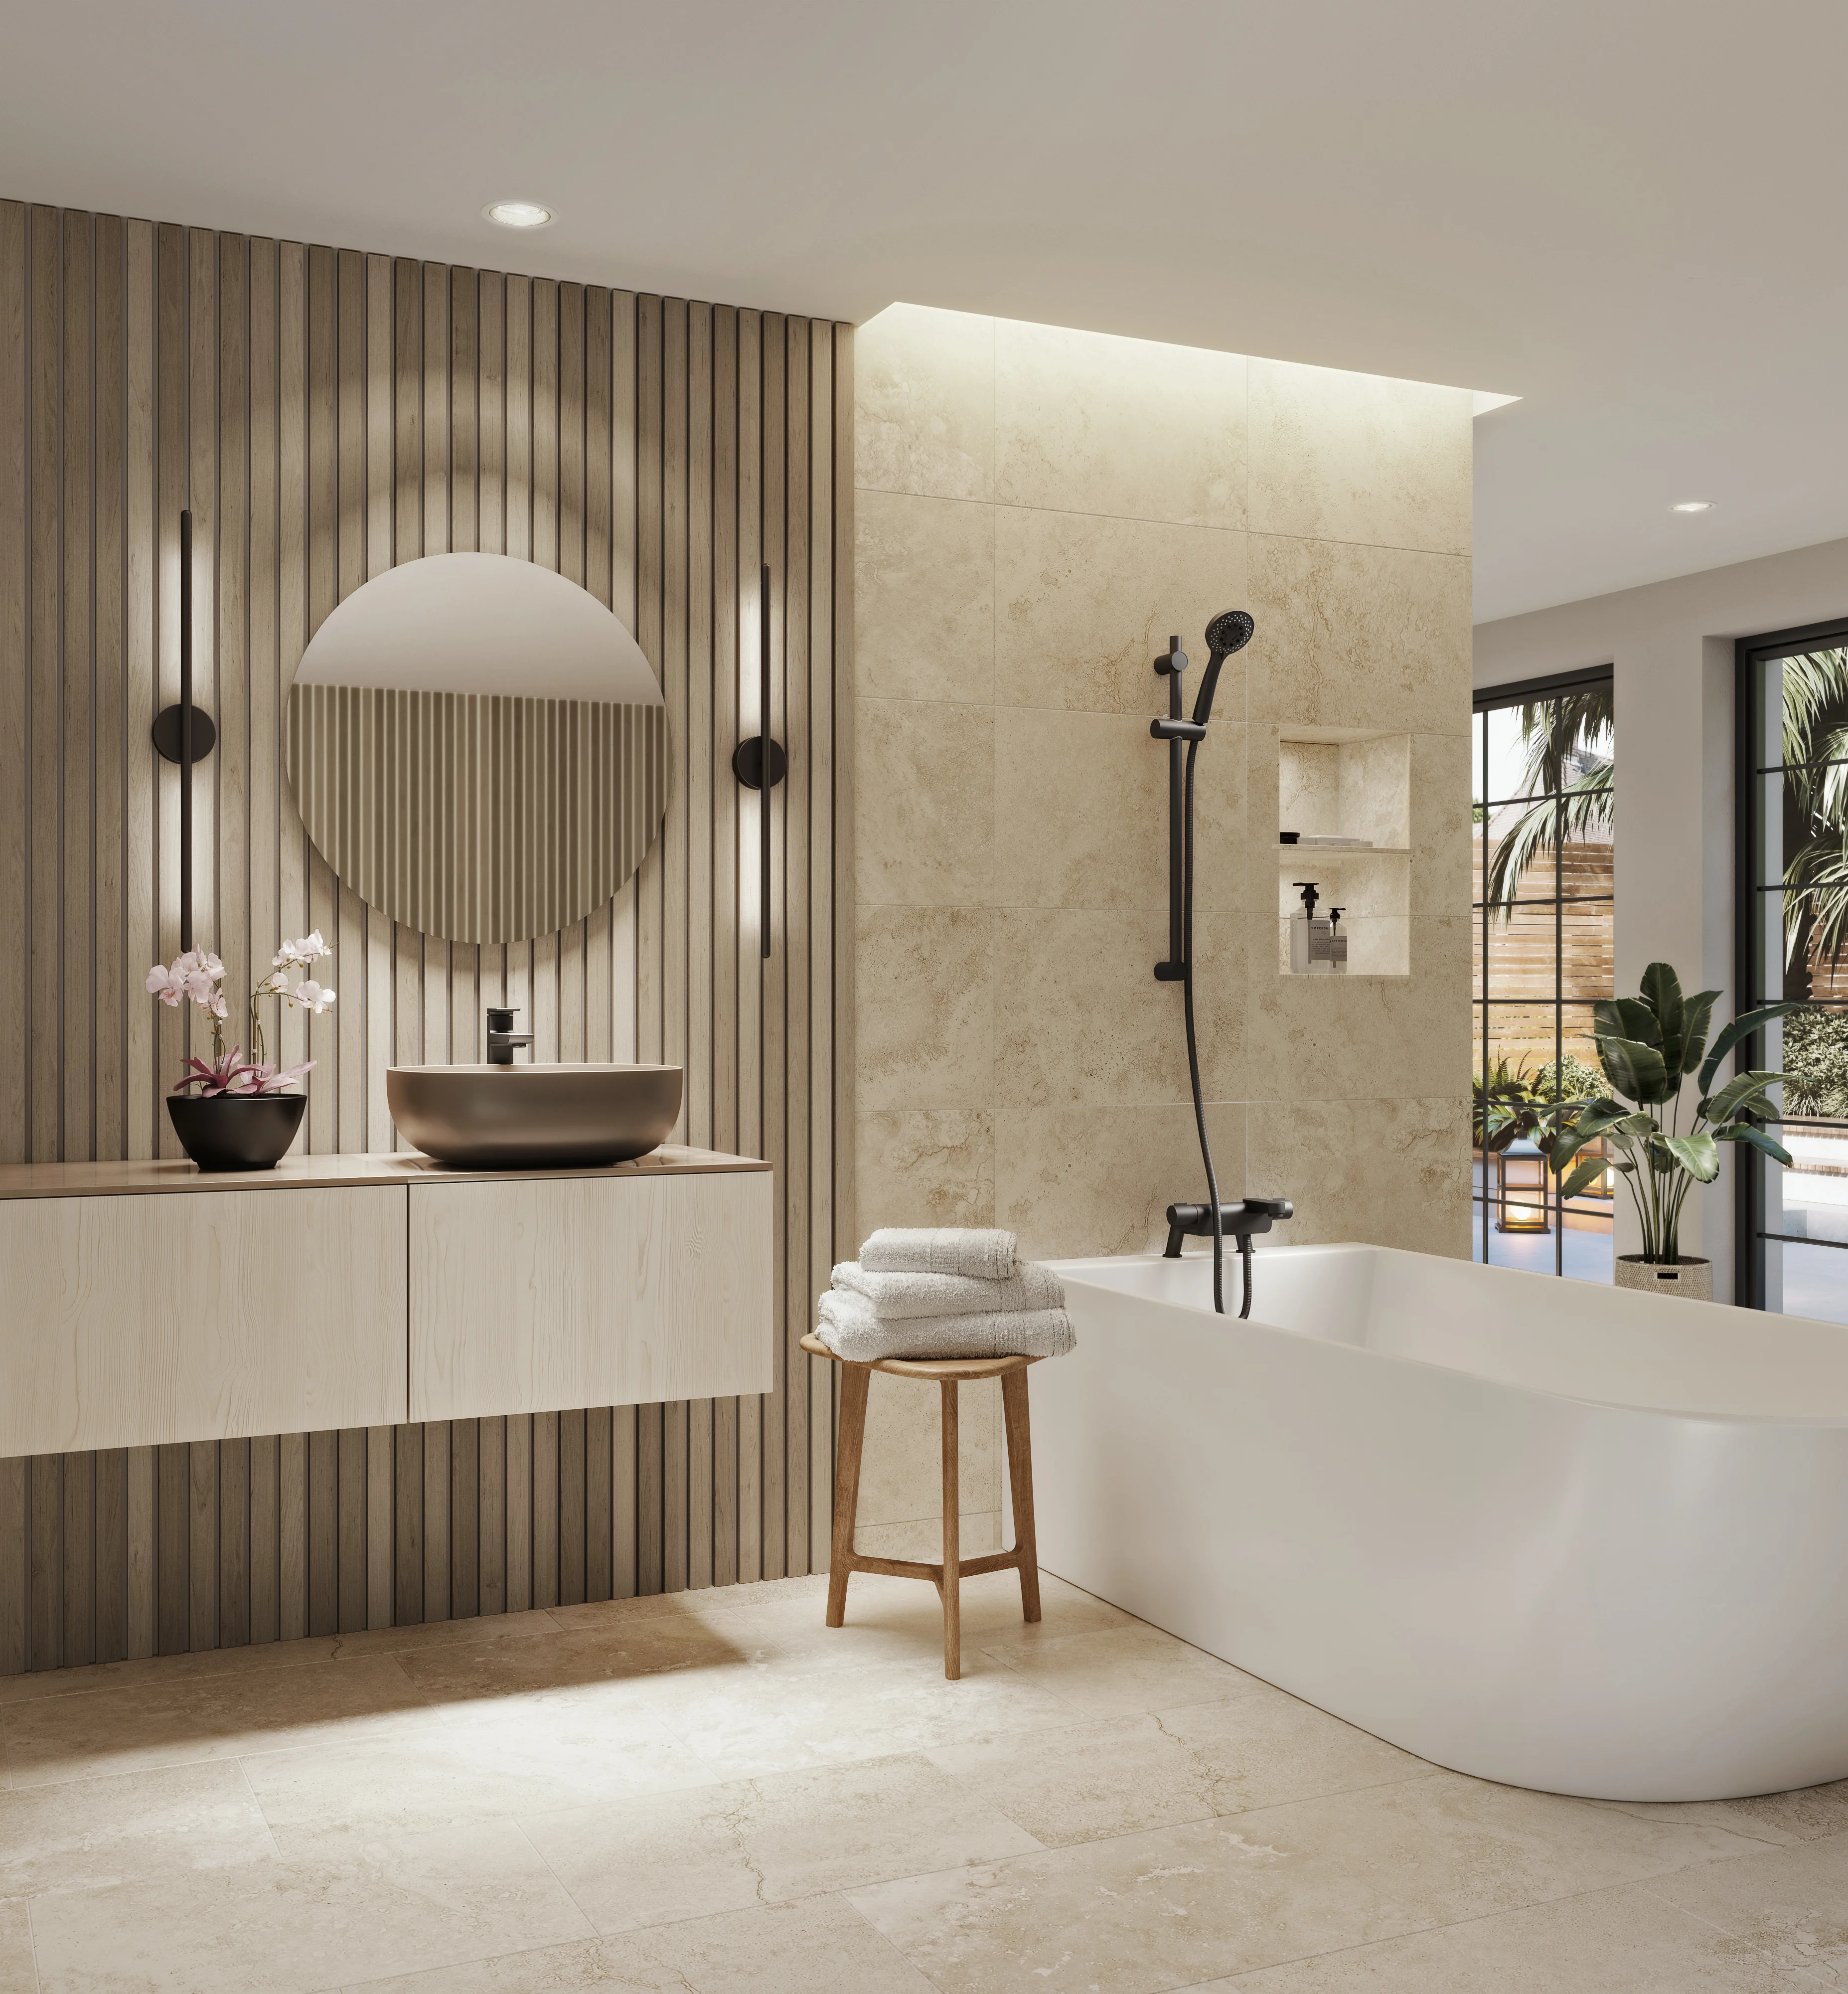 4 Easy Ways to Create a Spa Bathroom, How to turn your bathroom into a spa